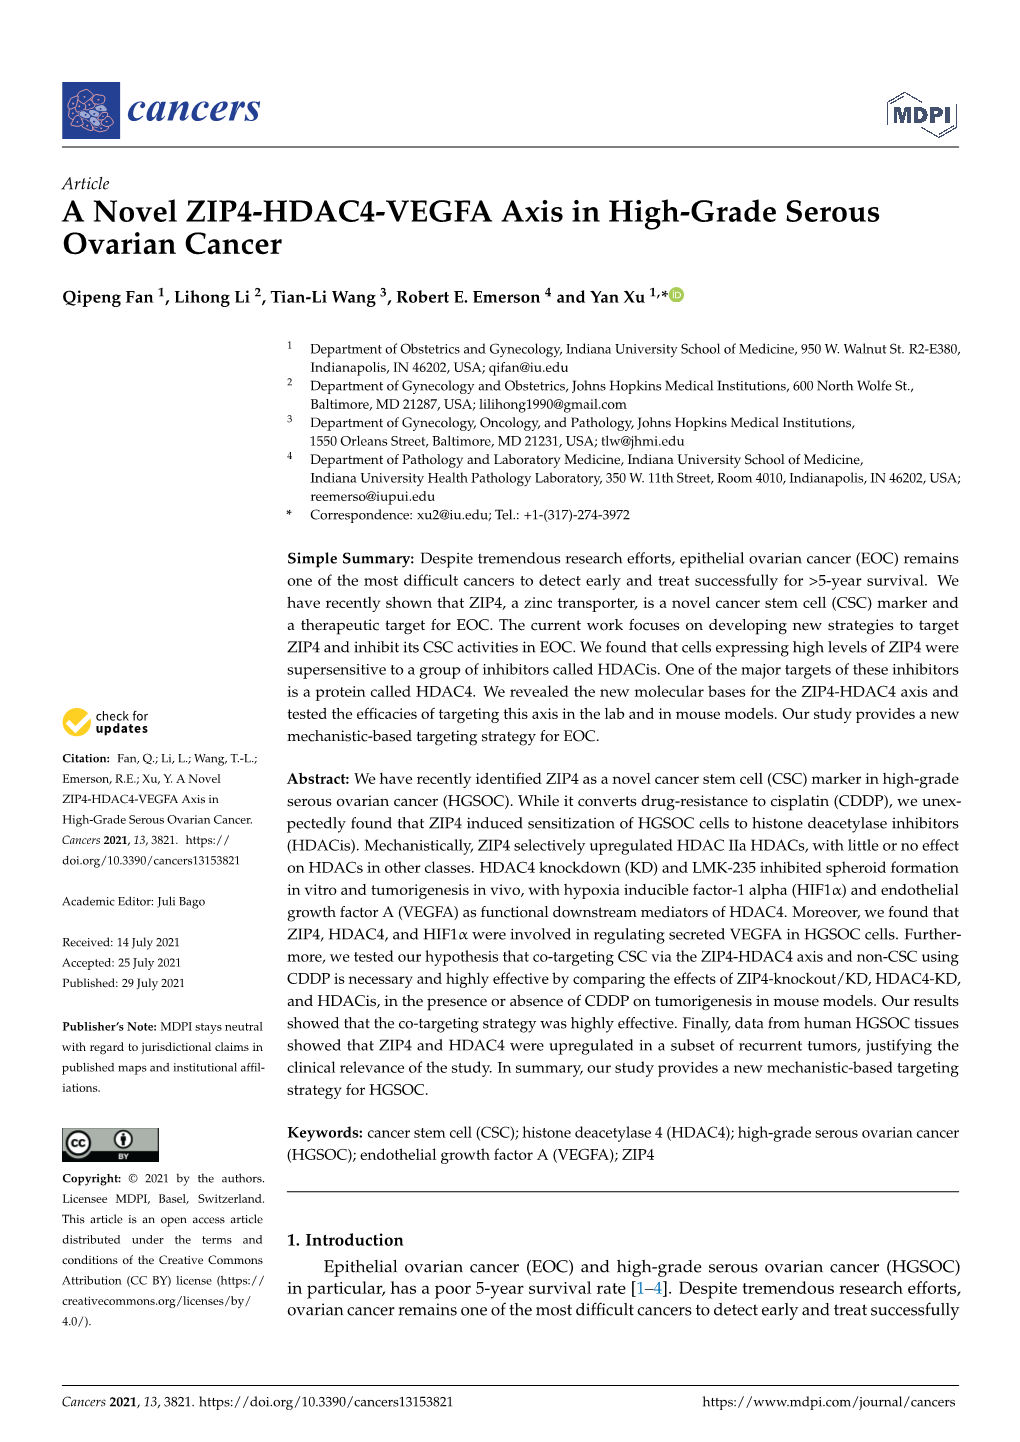 A Novel ZIP4-HDAC4-VEGFA Axis in High-Grade Serous Ovarian Cancer